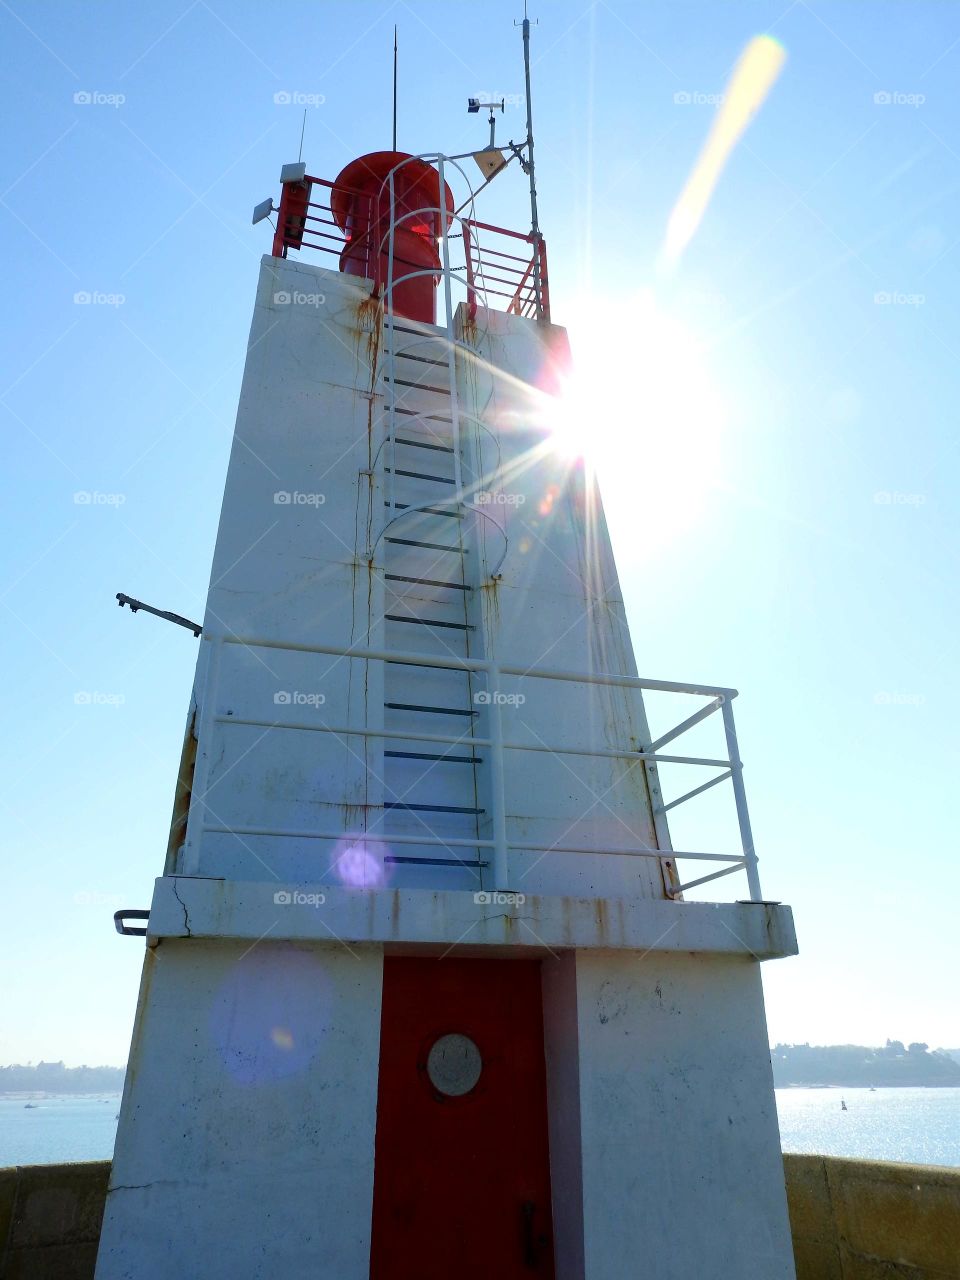 Lighthouse of Saint-Malo, France